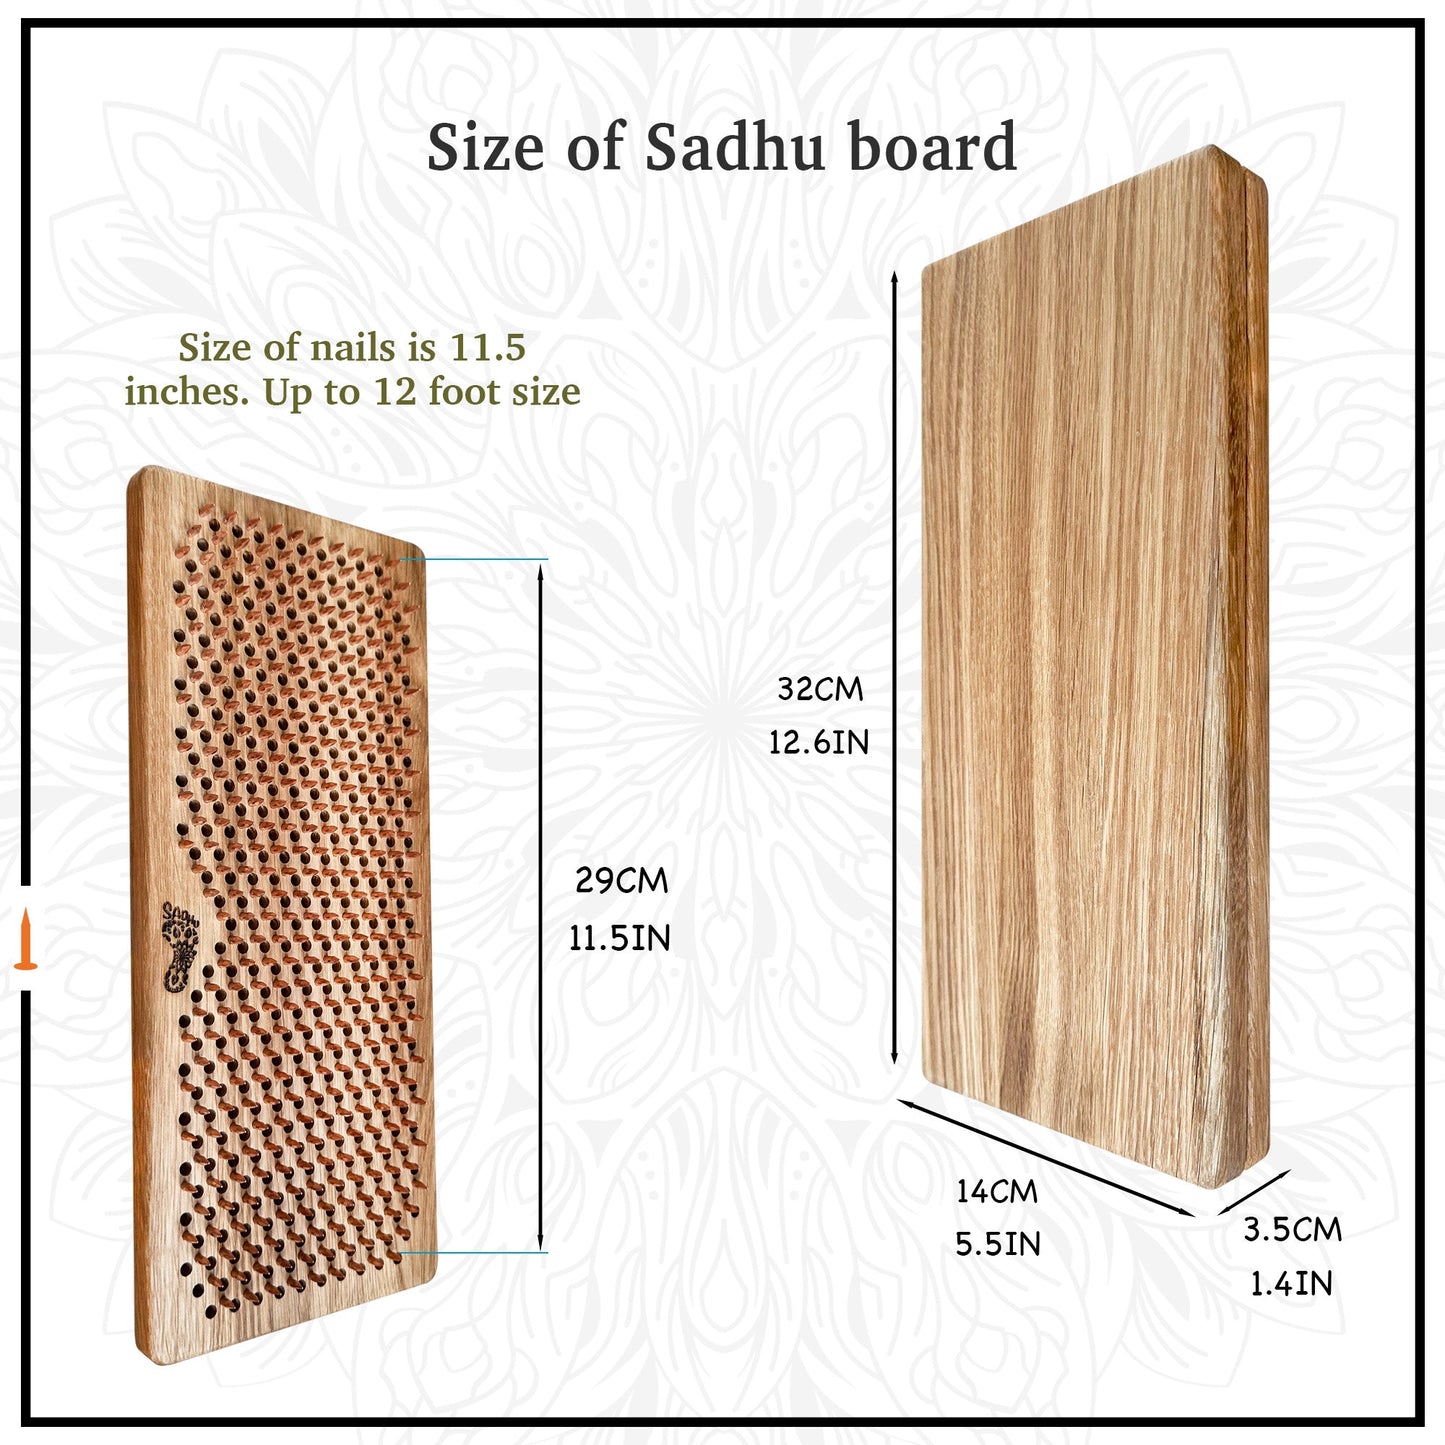 Dimensions of copper nails sadhu board from oak. 